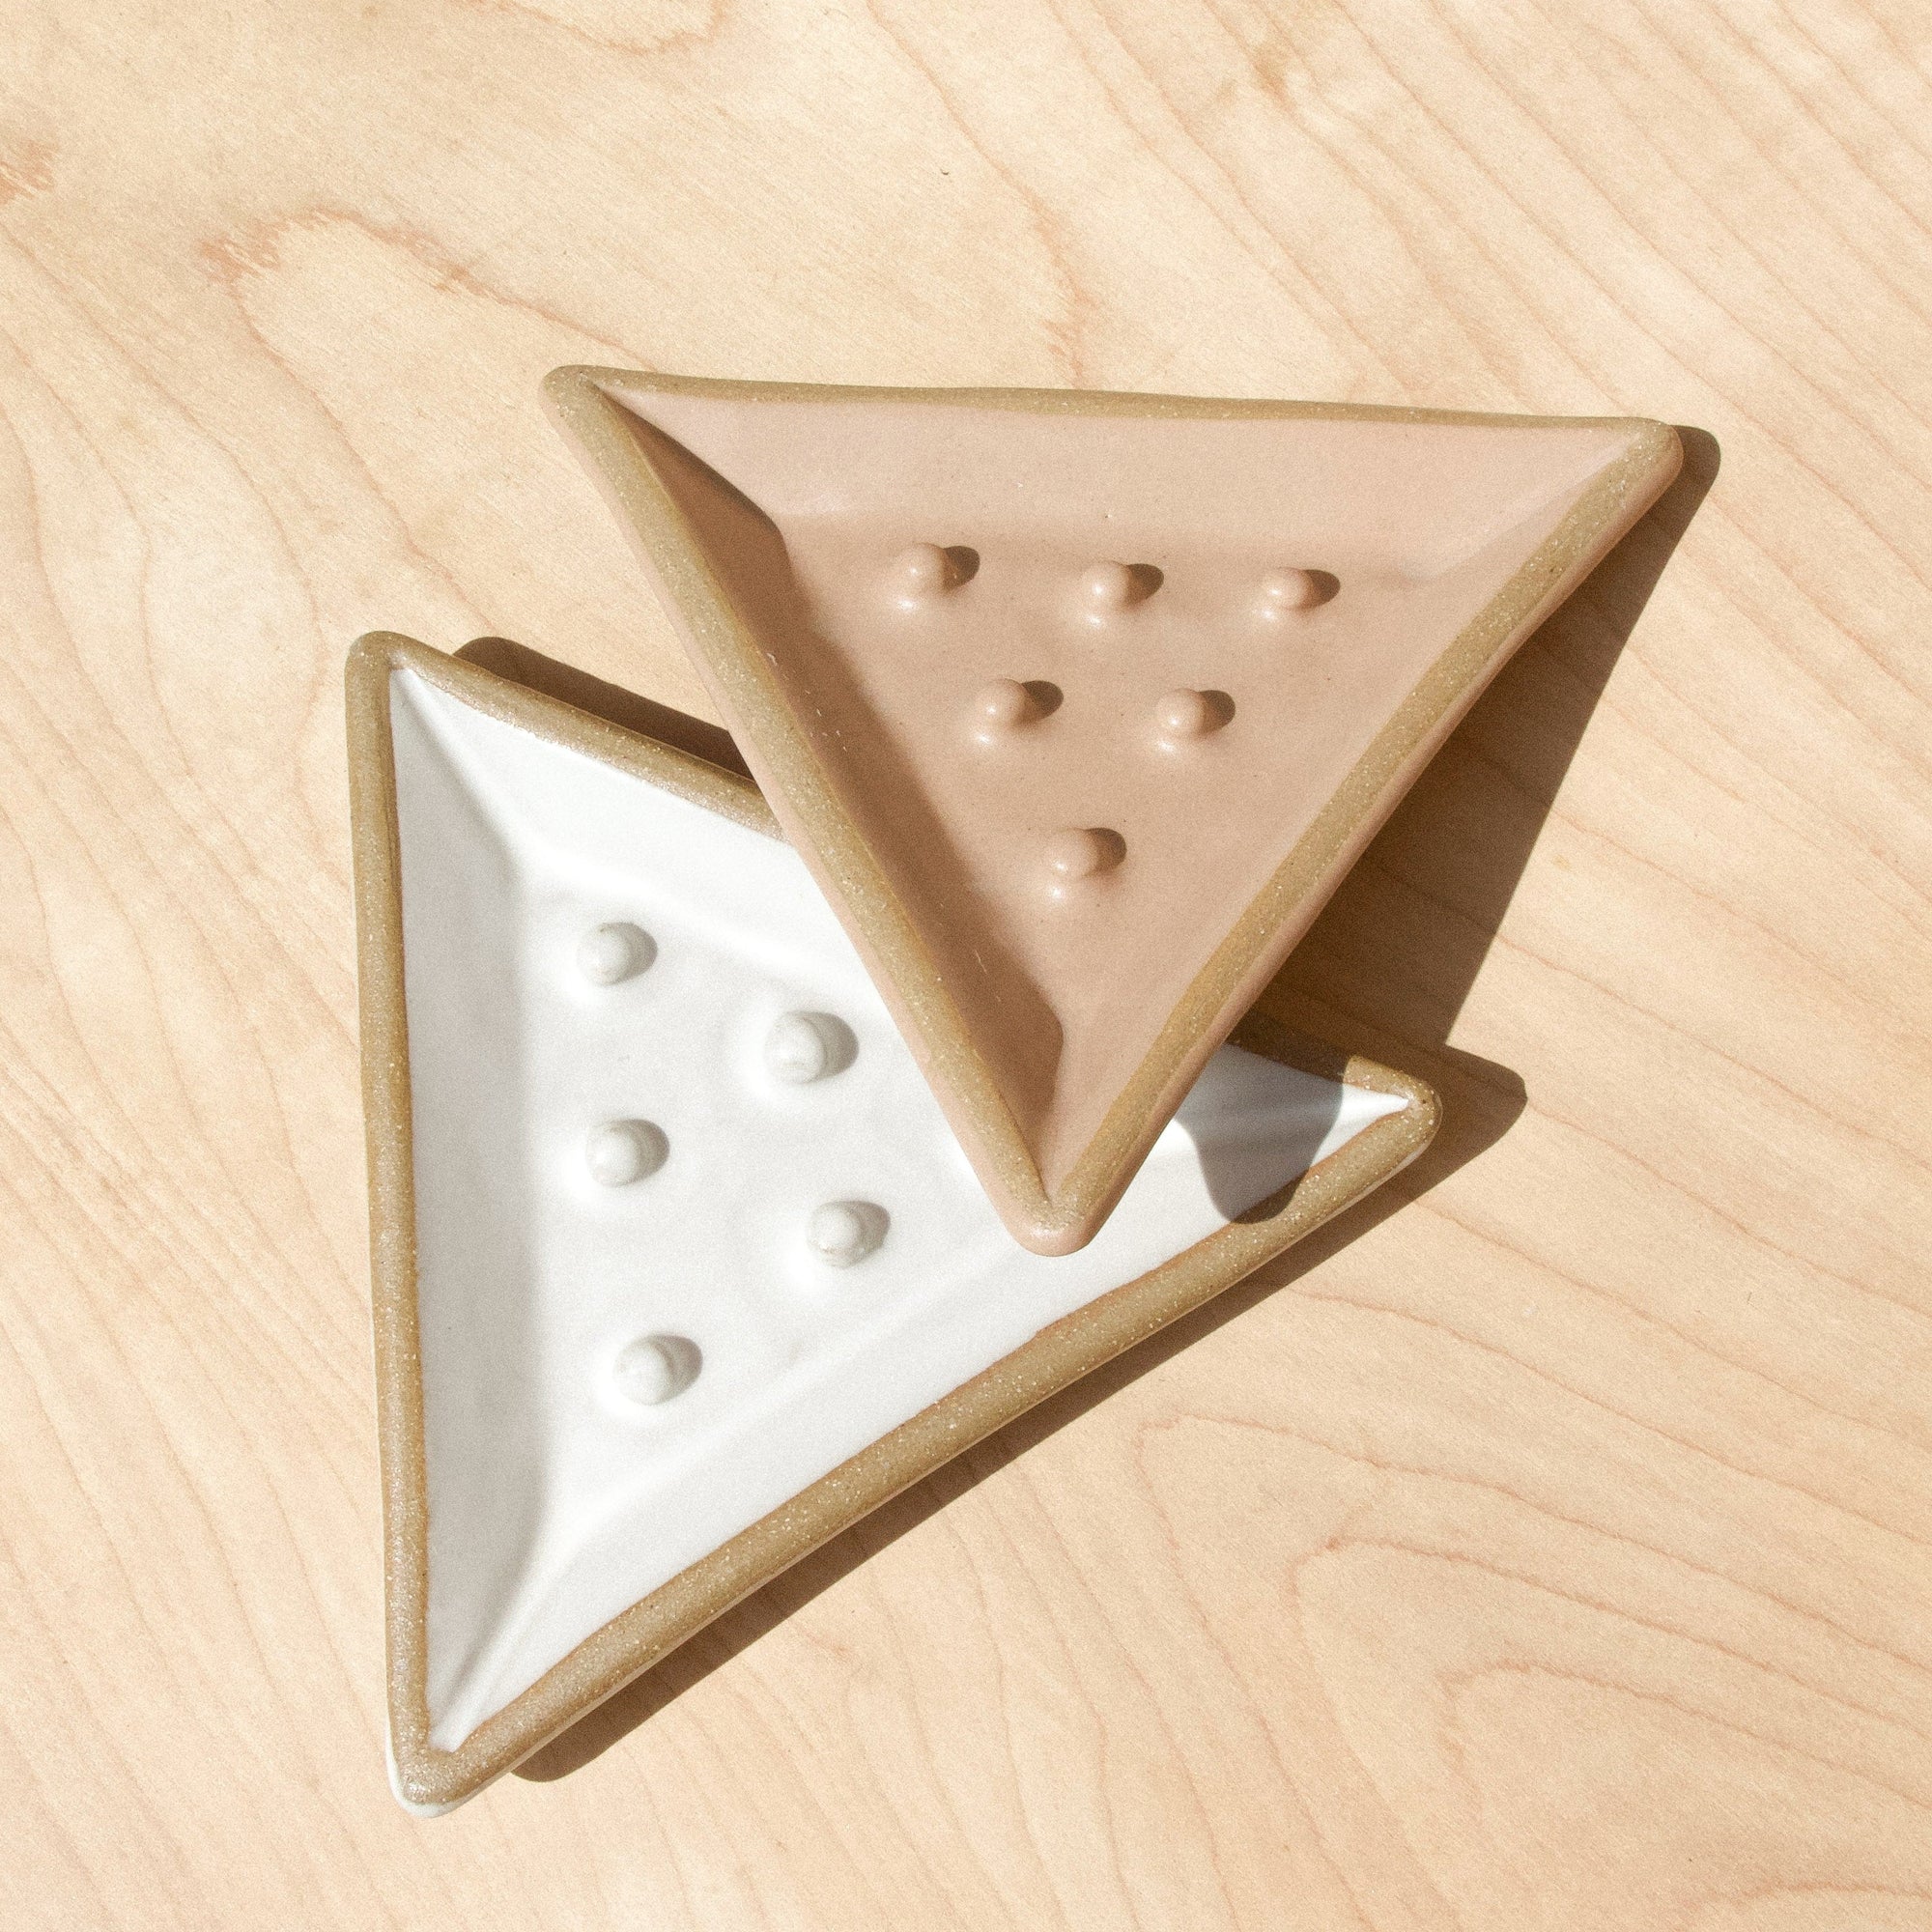 Two triangular ceramic soap dishes against wood grain